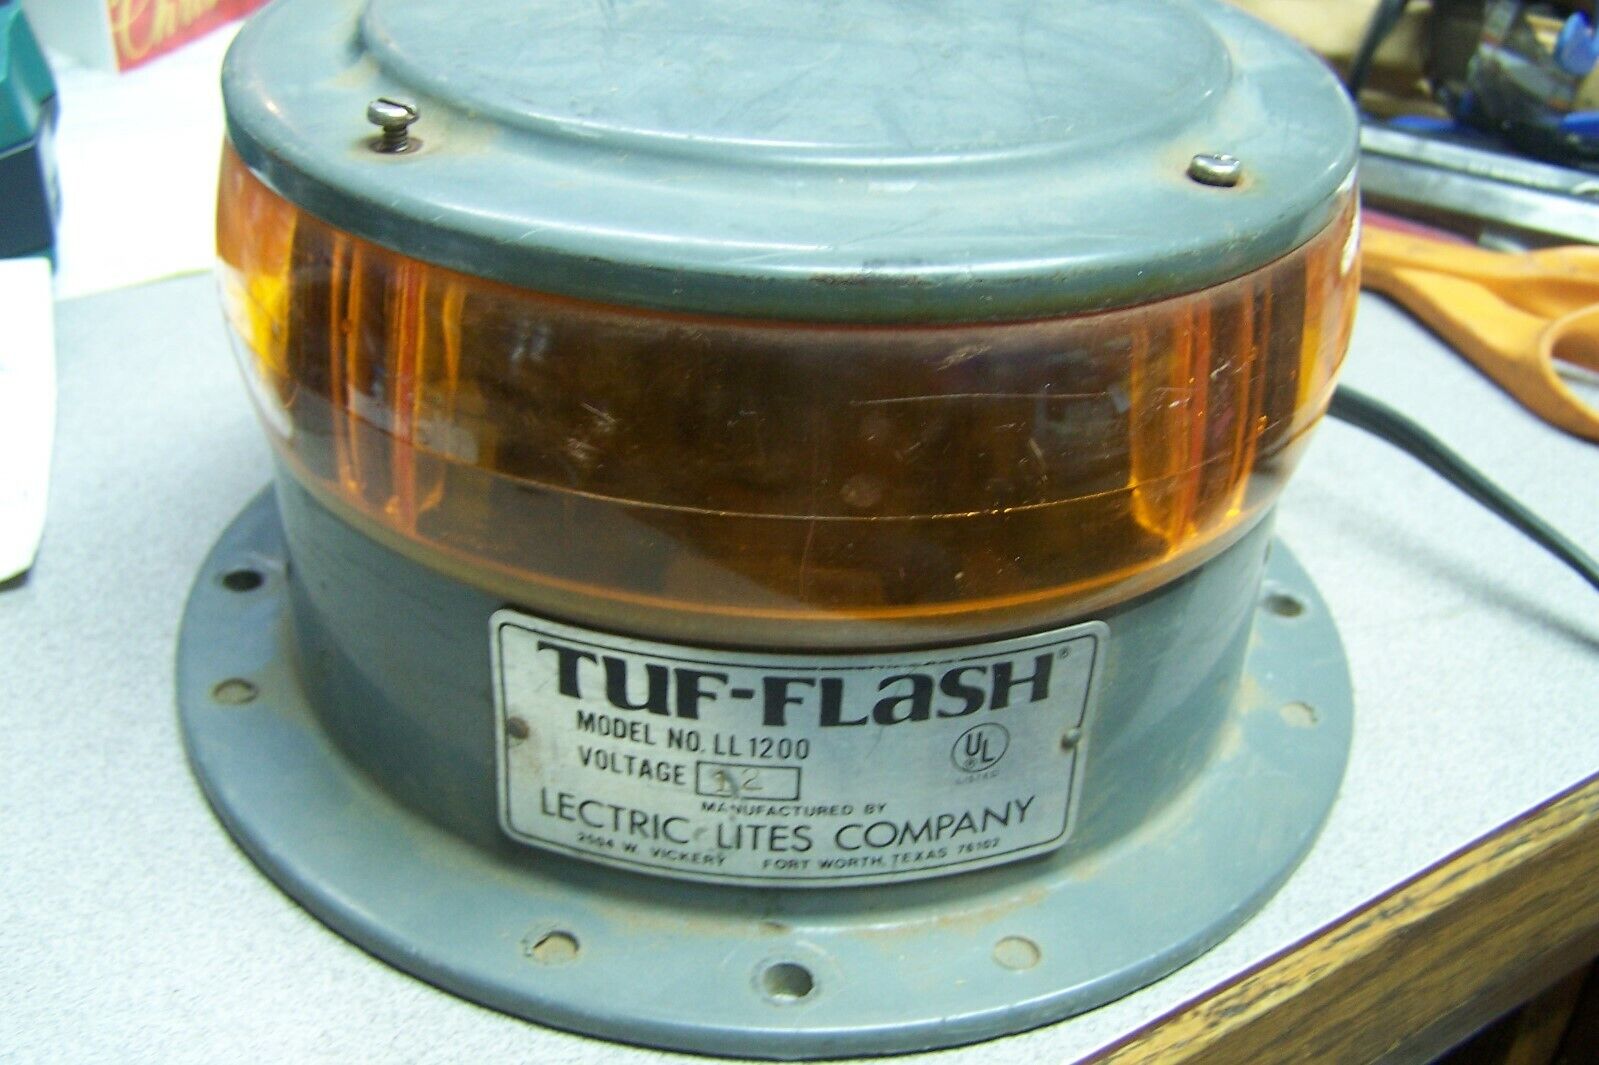 Electric Lite Tuf Flash strobe light 